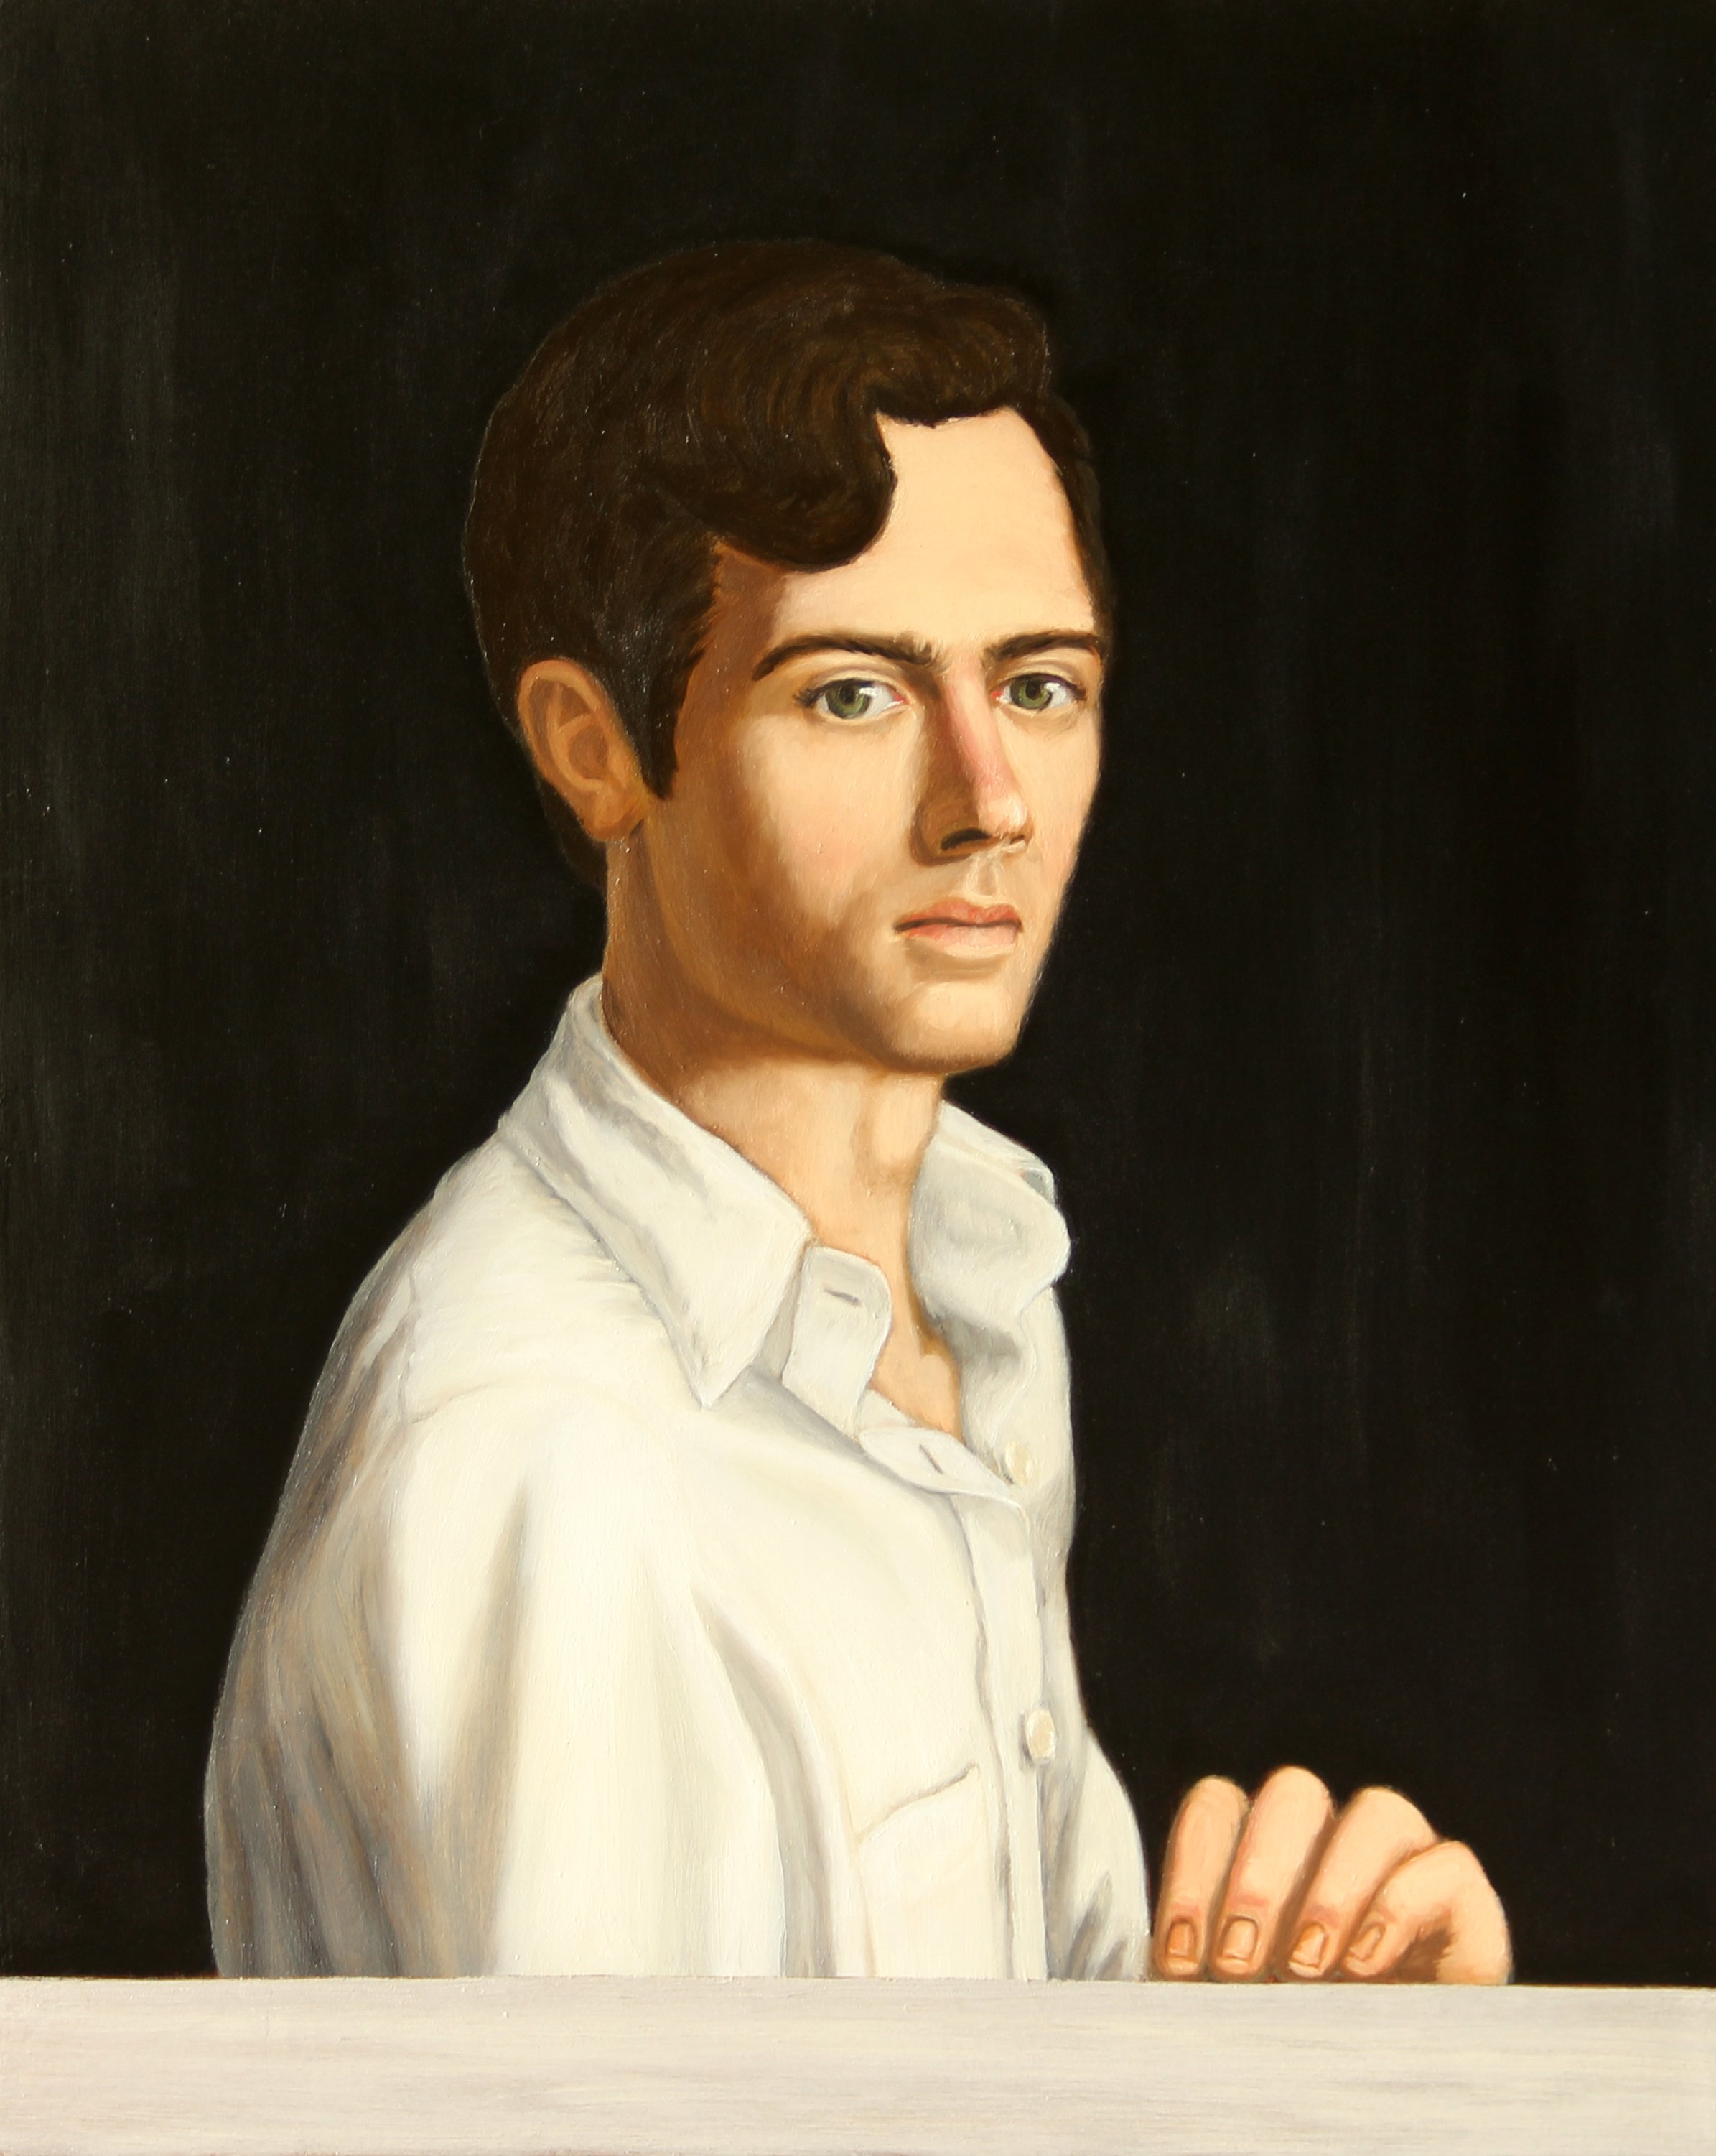 Self Portrait, 2022. Oil on wood. 20 x 16".